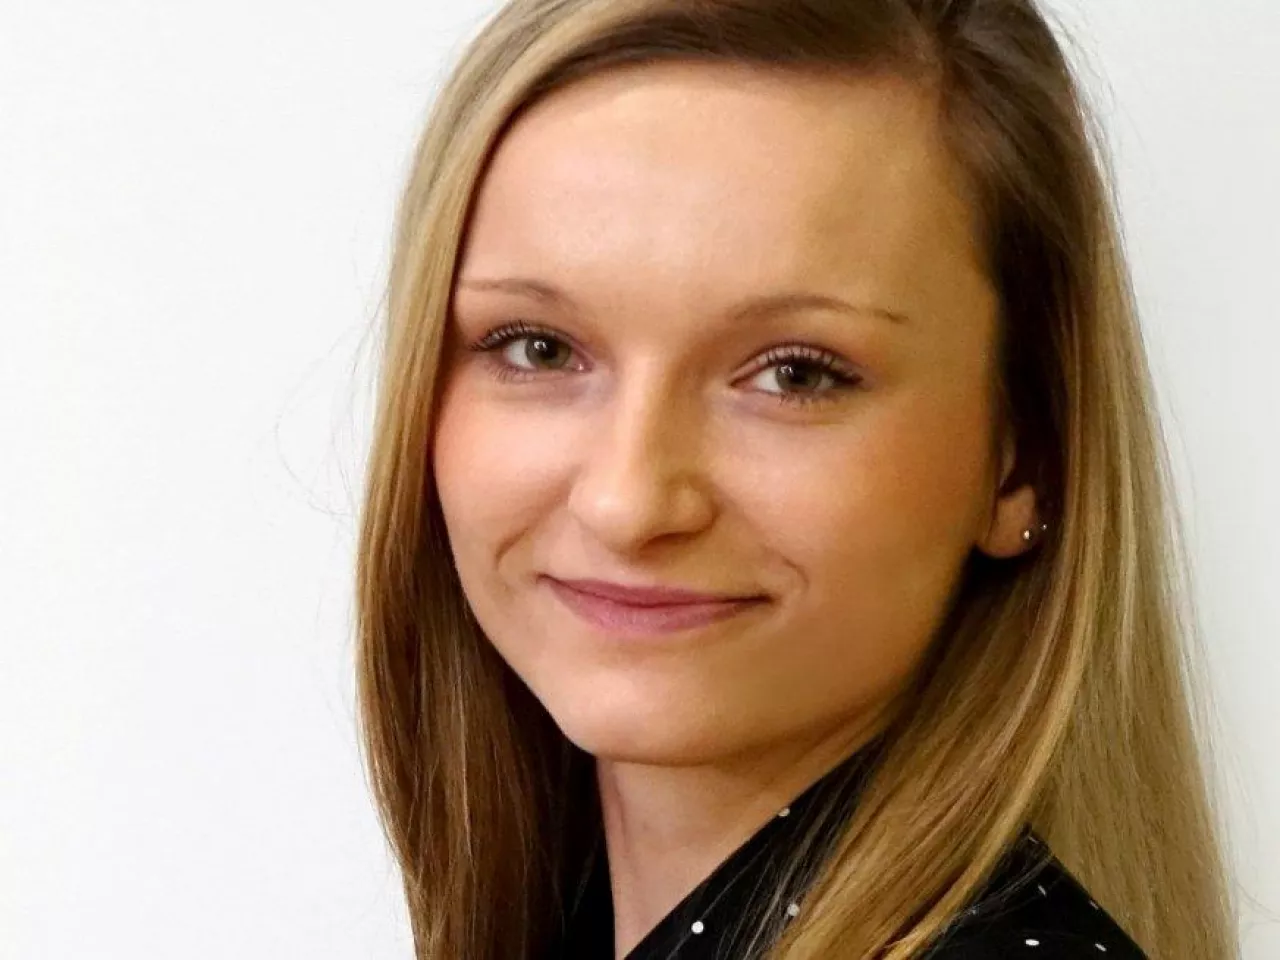 Paulina Midor, junior category manager w firmie Bielmar (fot. Bielmar)